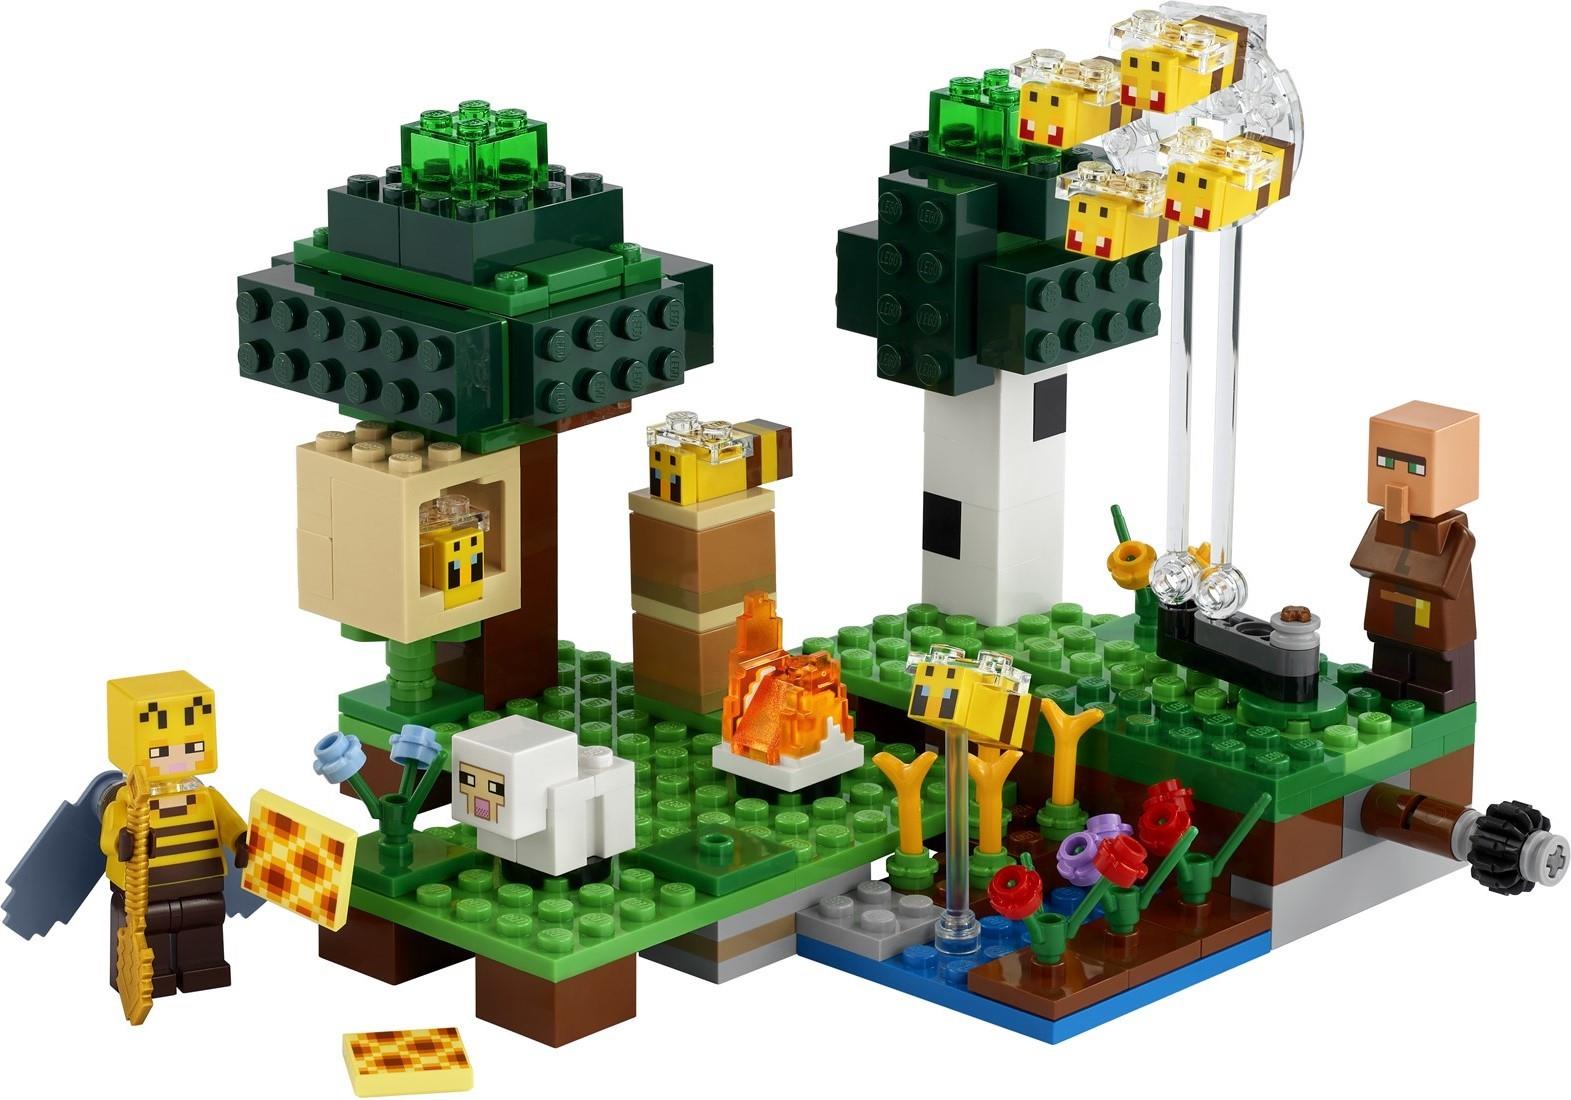 Lego Minecraft™ - Brick Creation